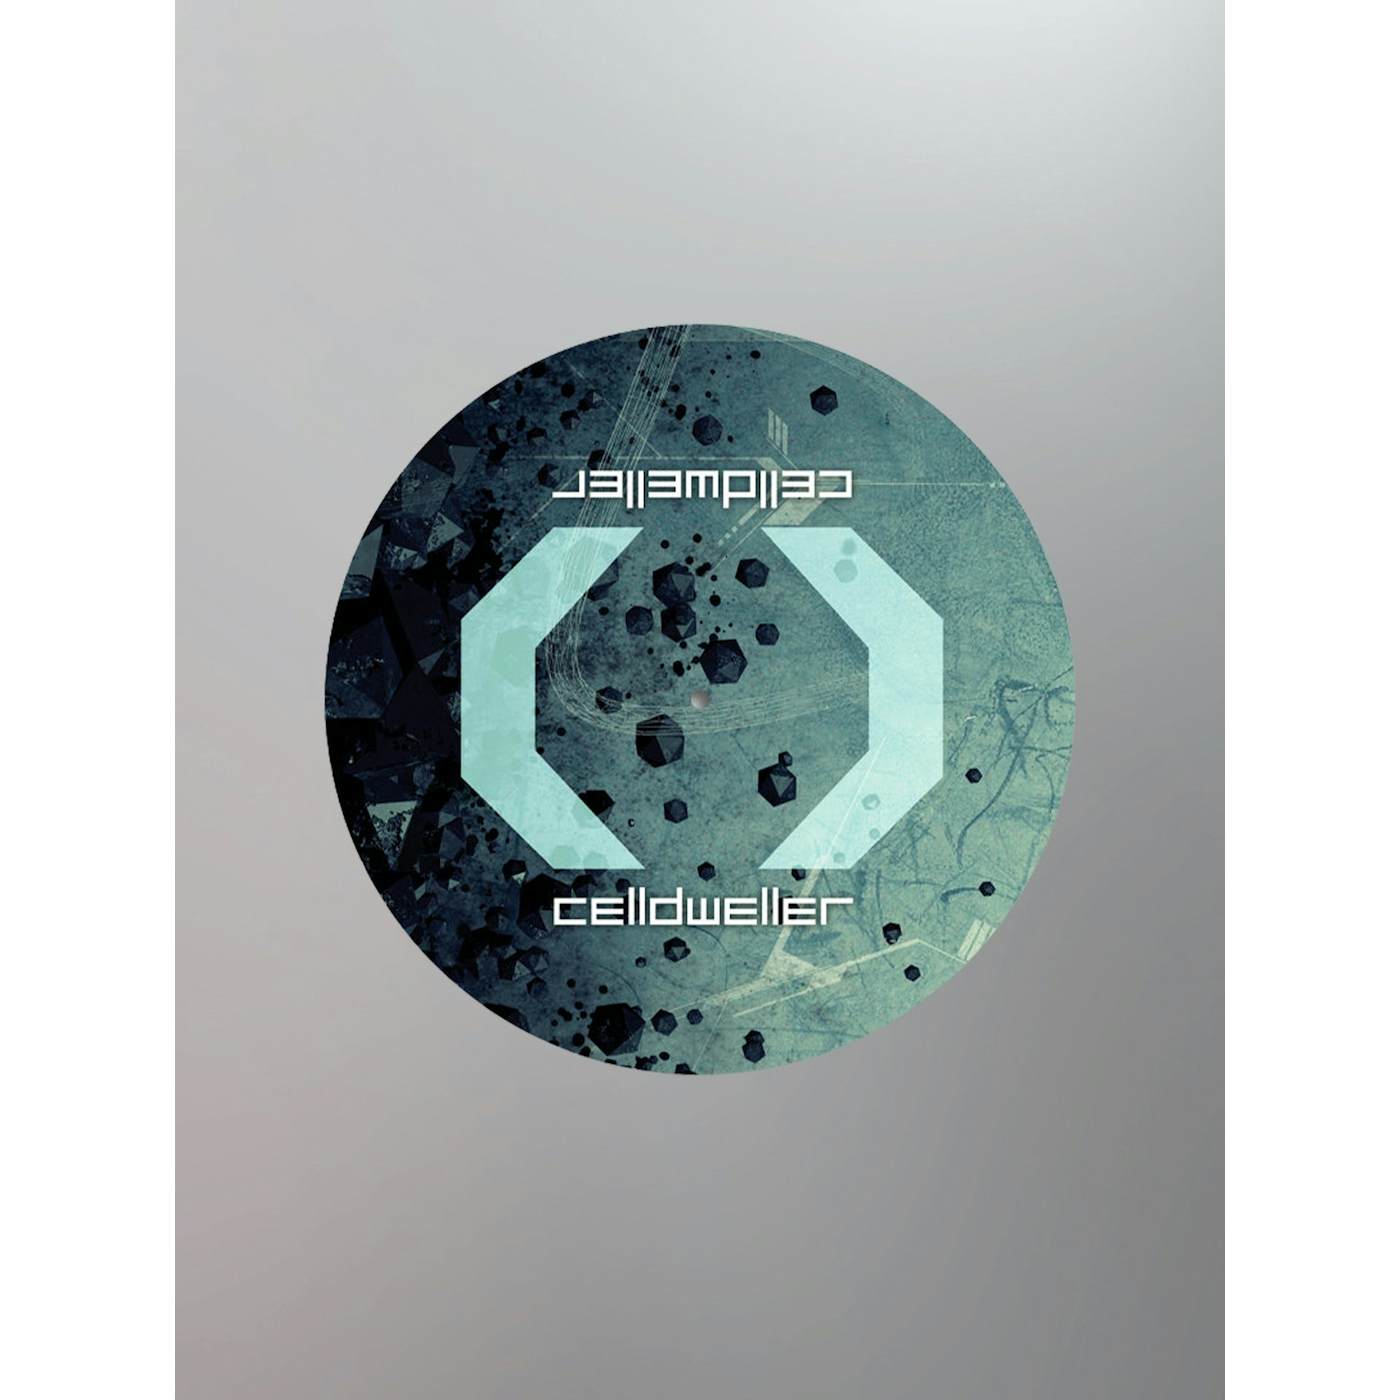 Celldweller - Vinyl Slipmat